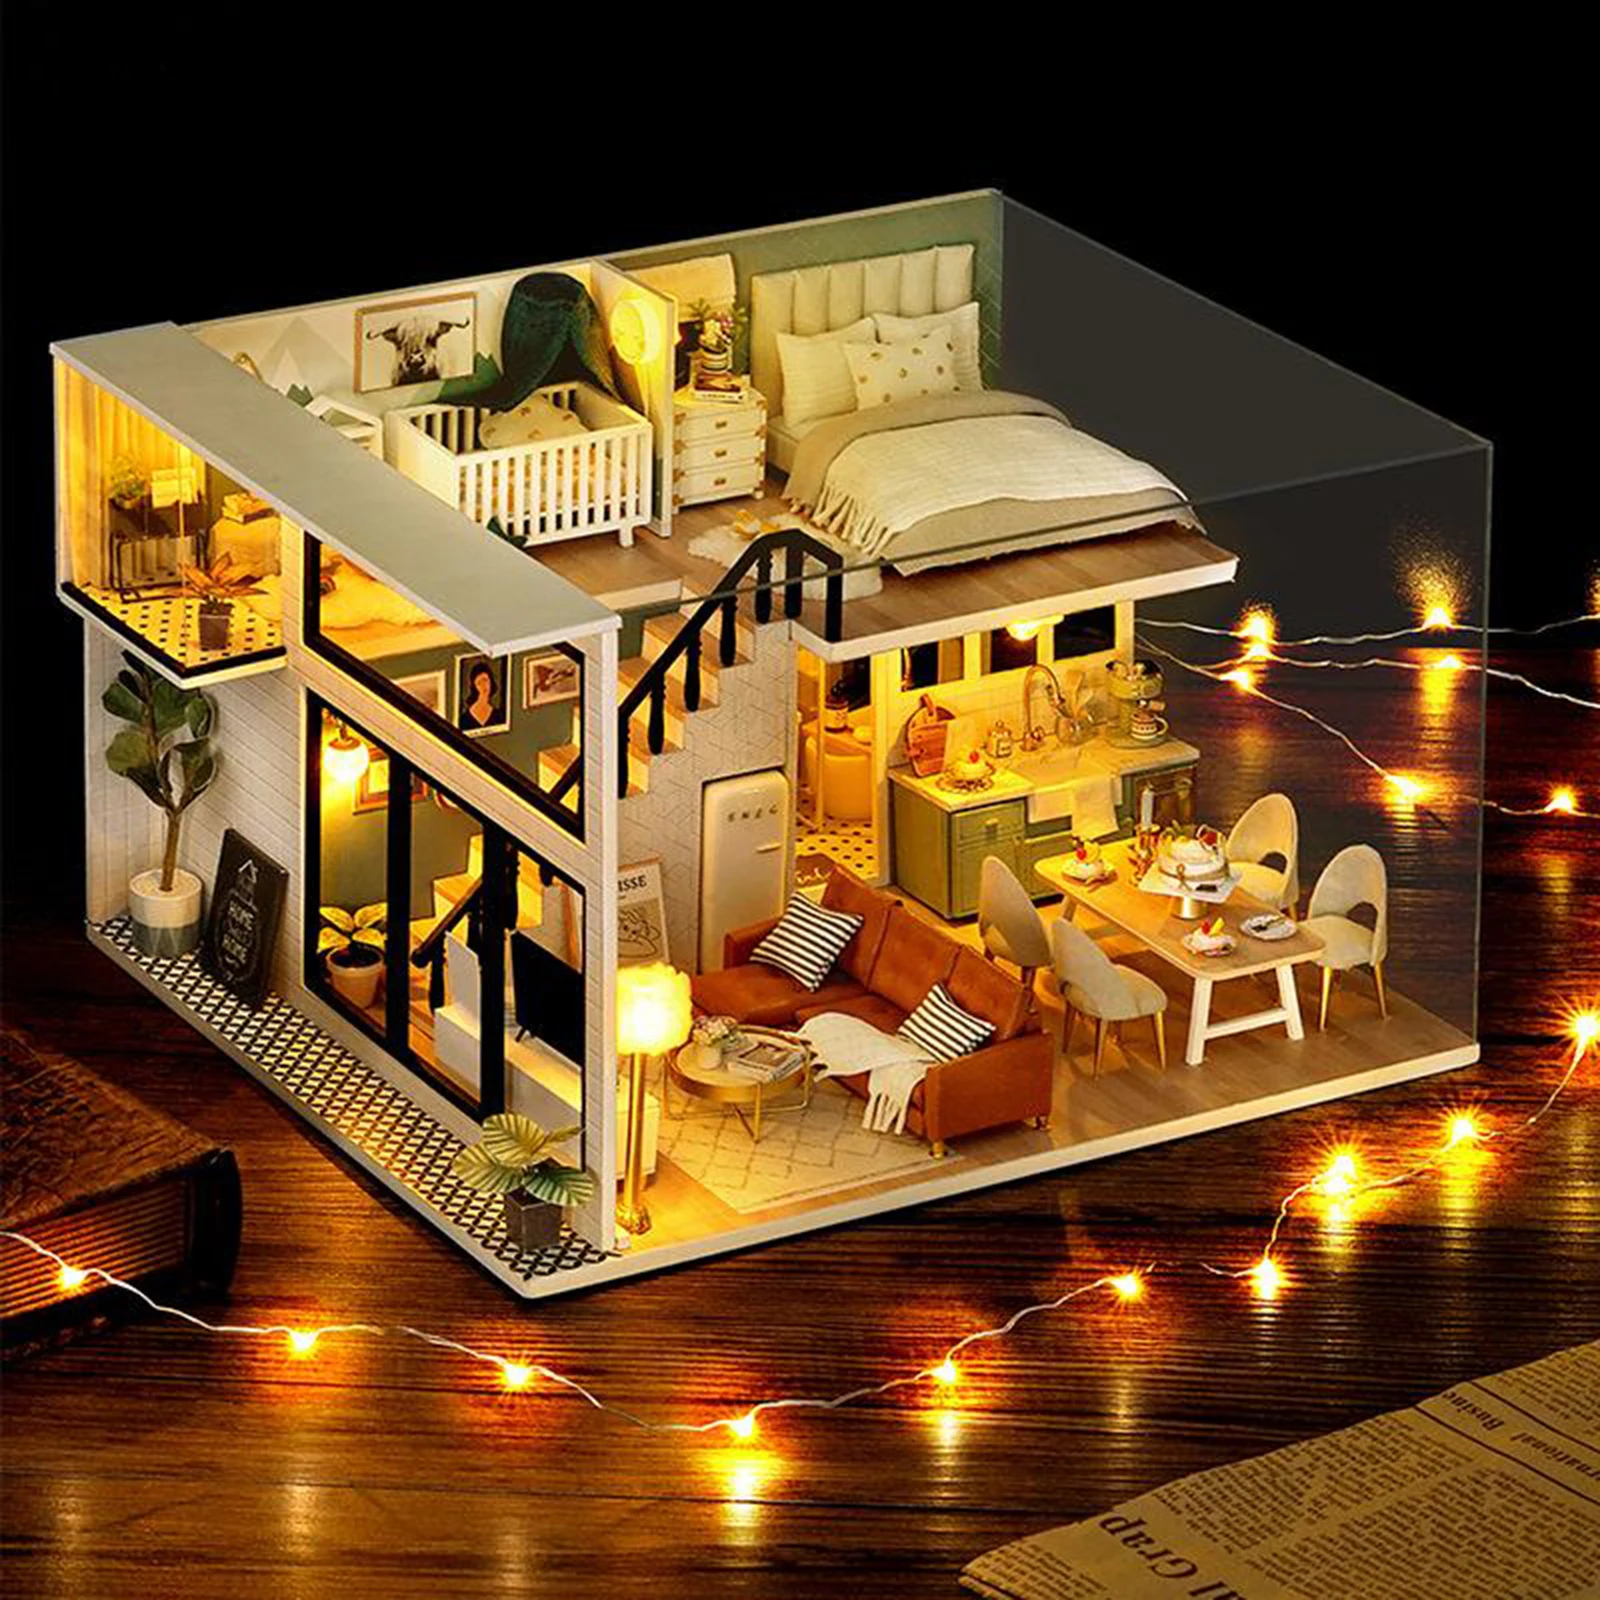 Miniature Dolls House Kit with Furniture, DIY Miniature House Model Kits,